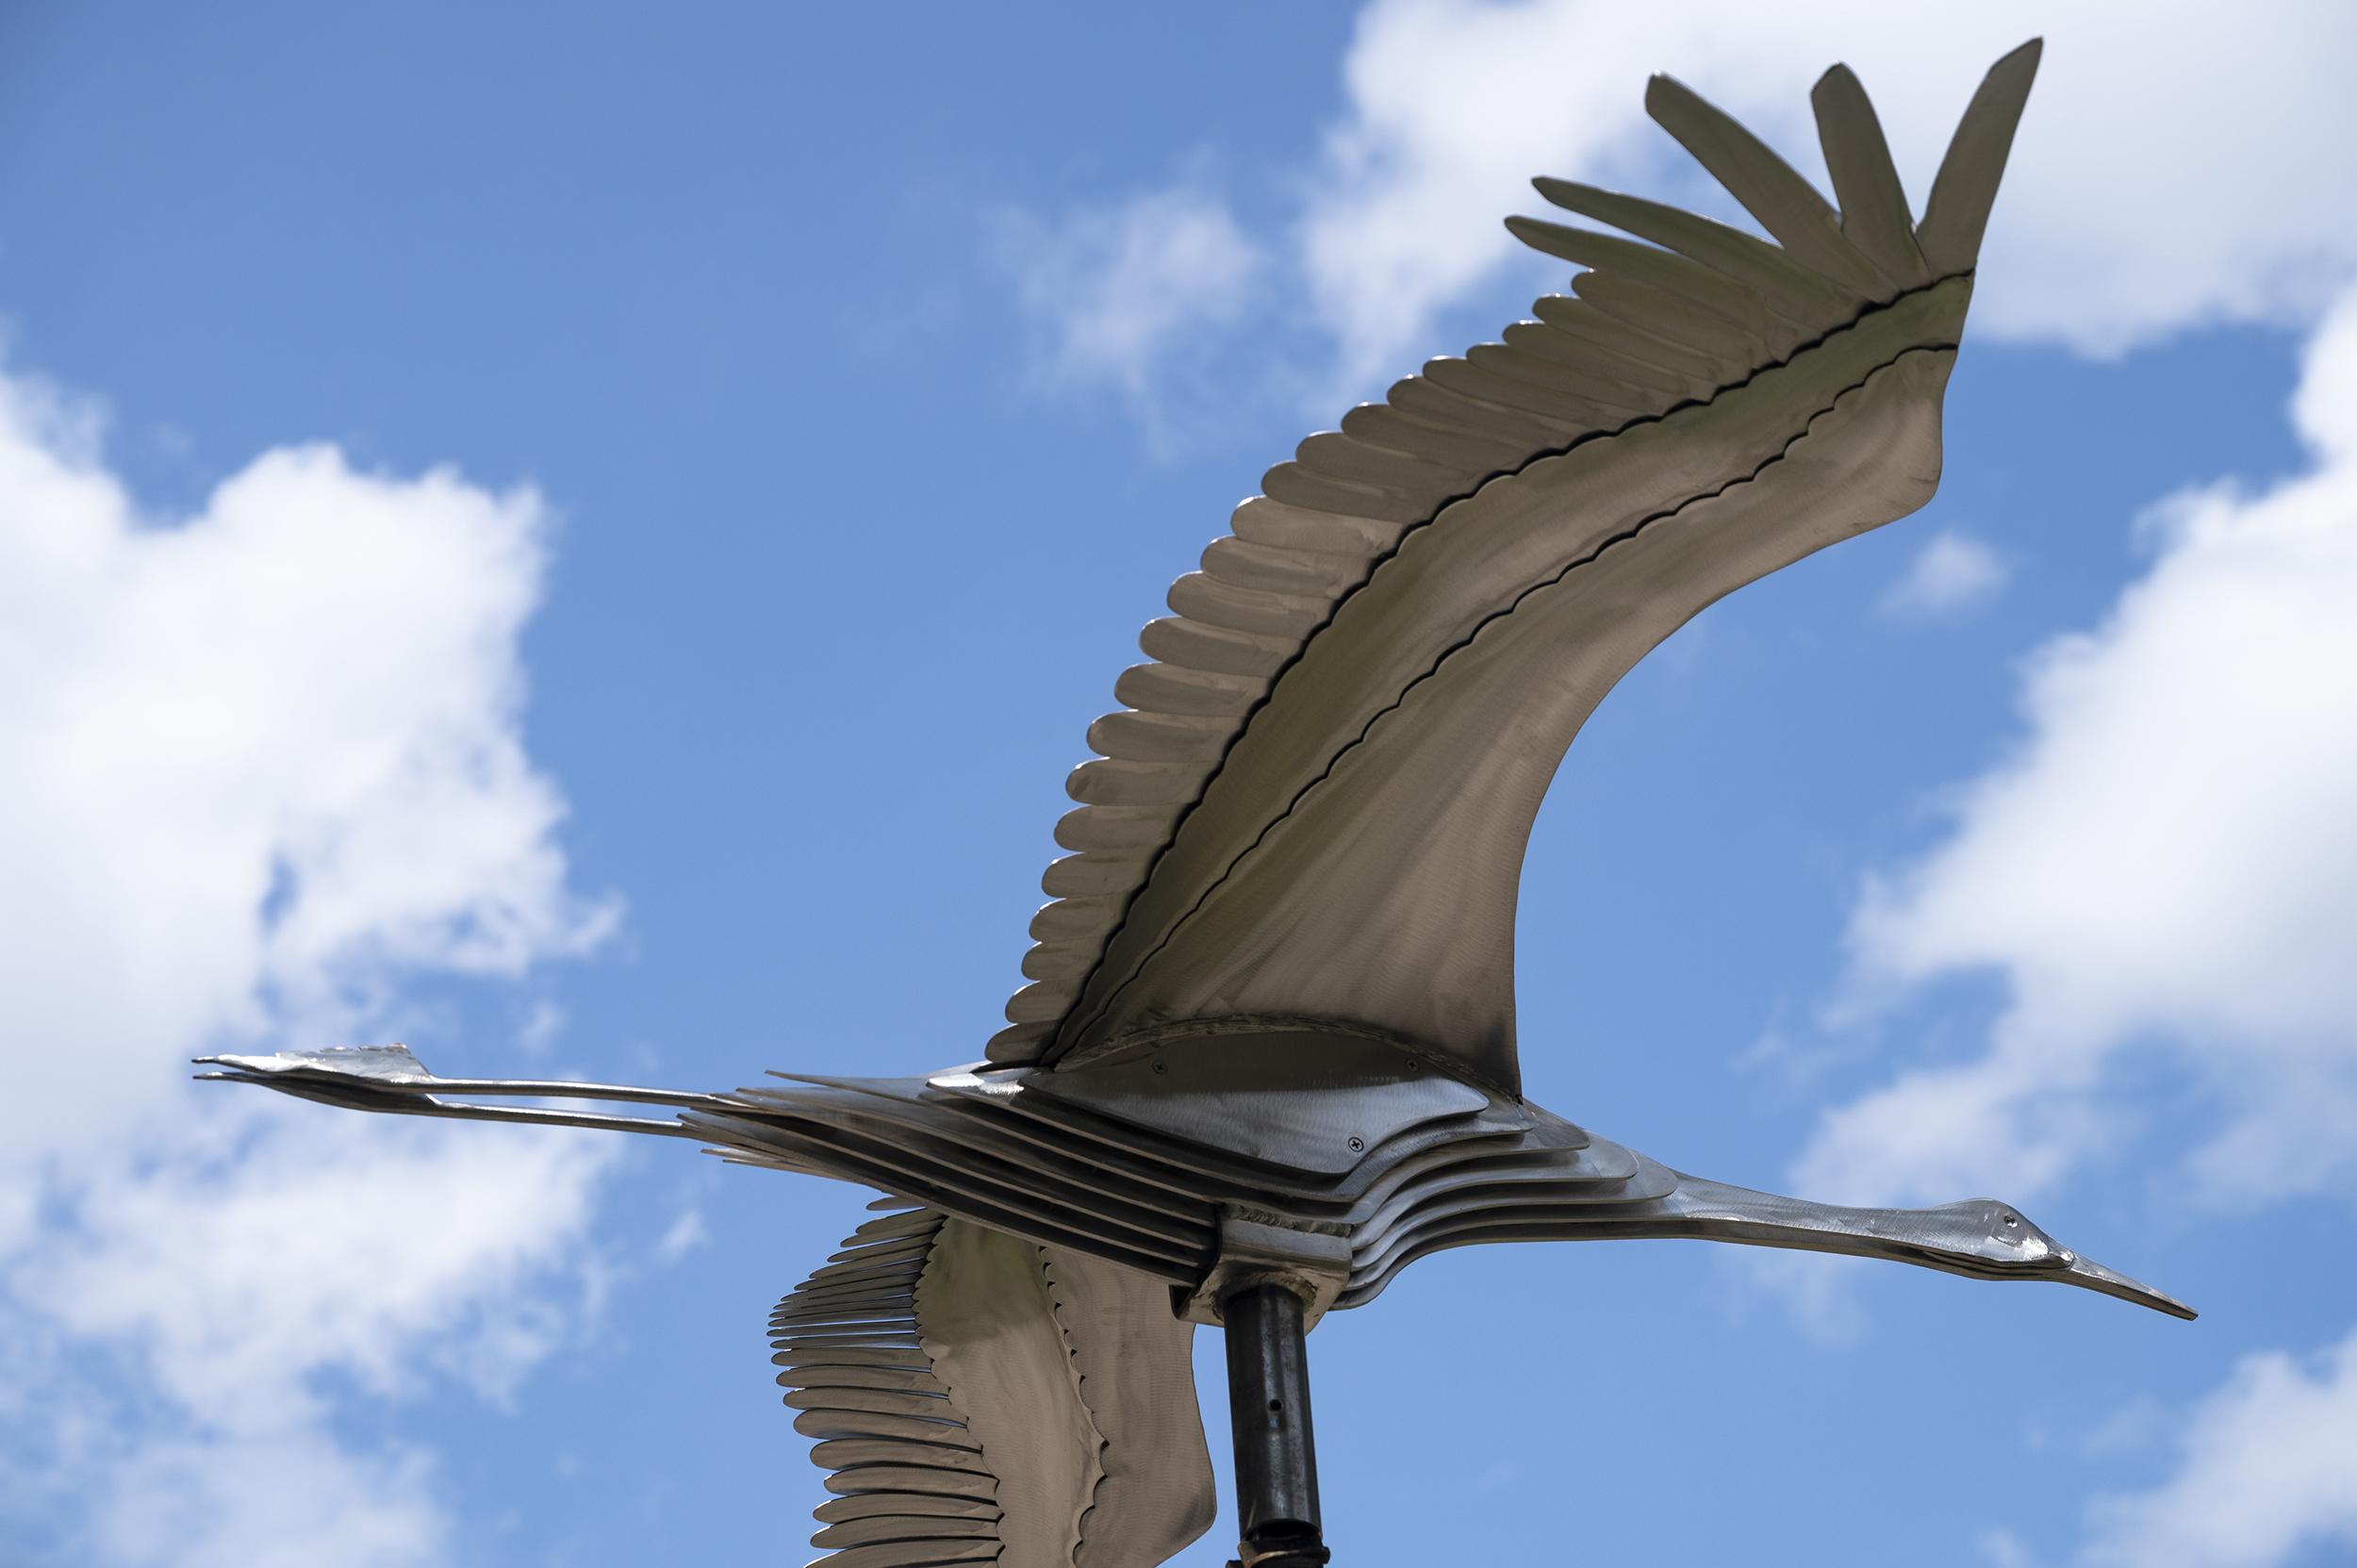 Stainless steel crane sculpture